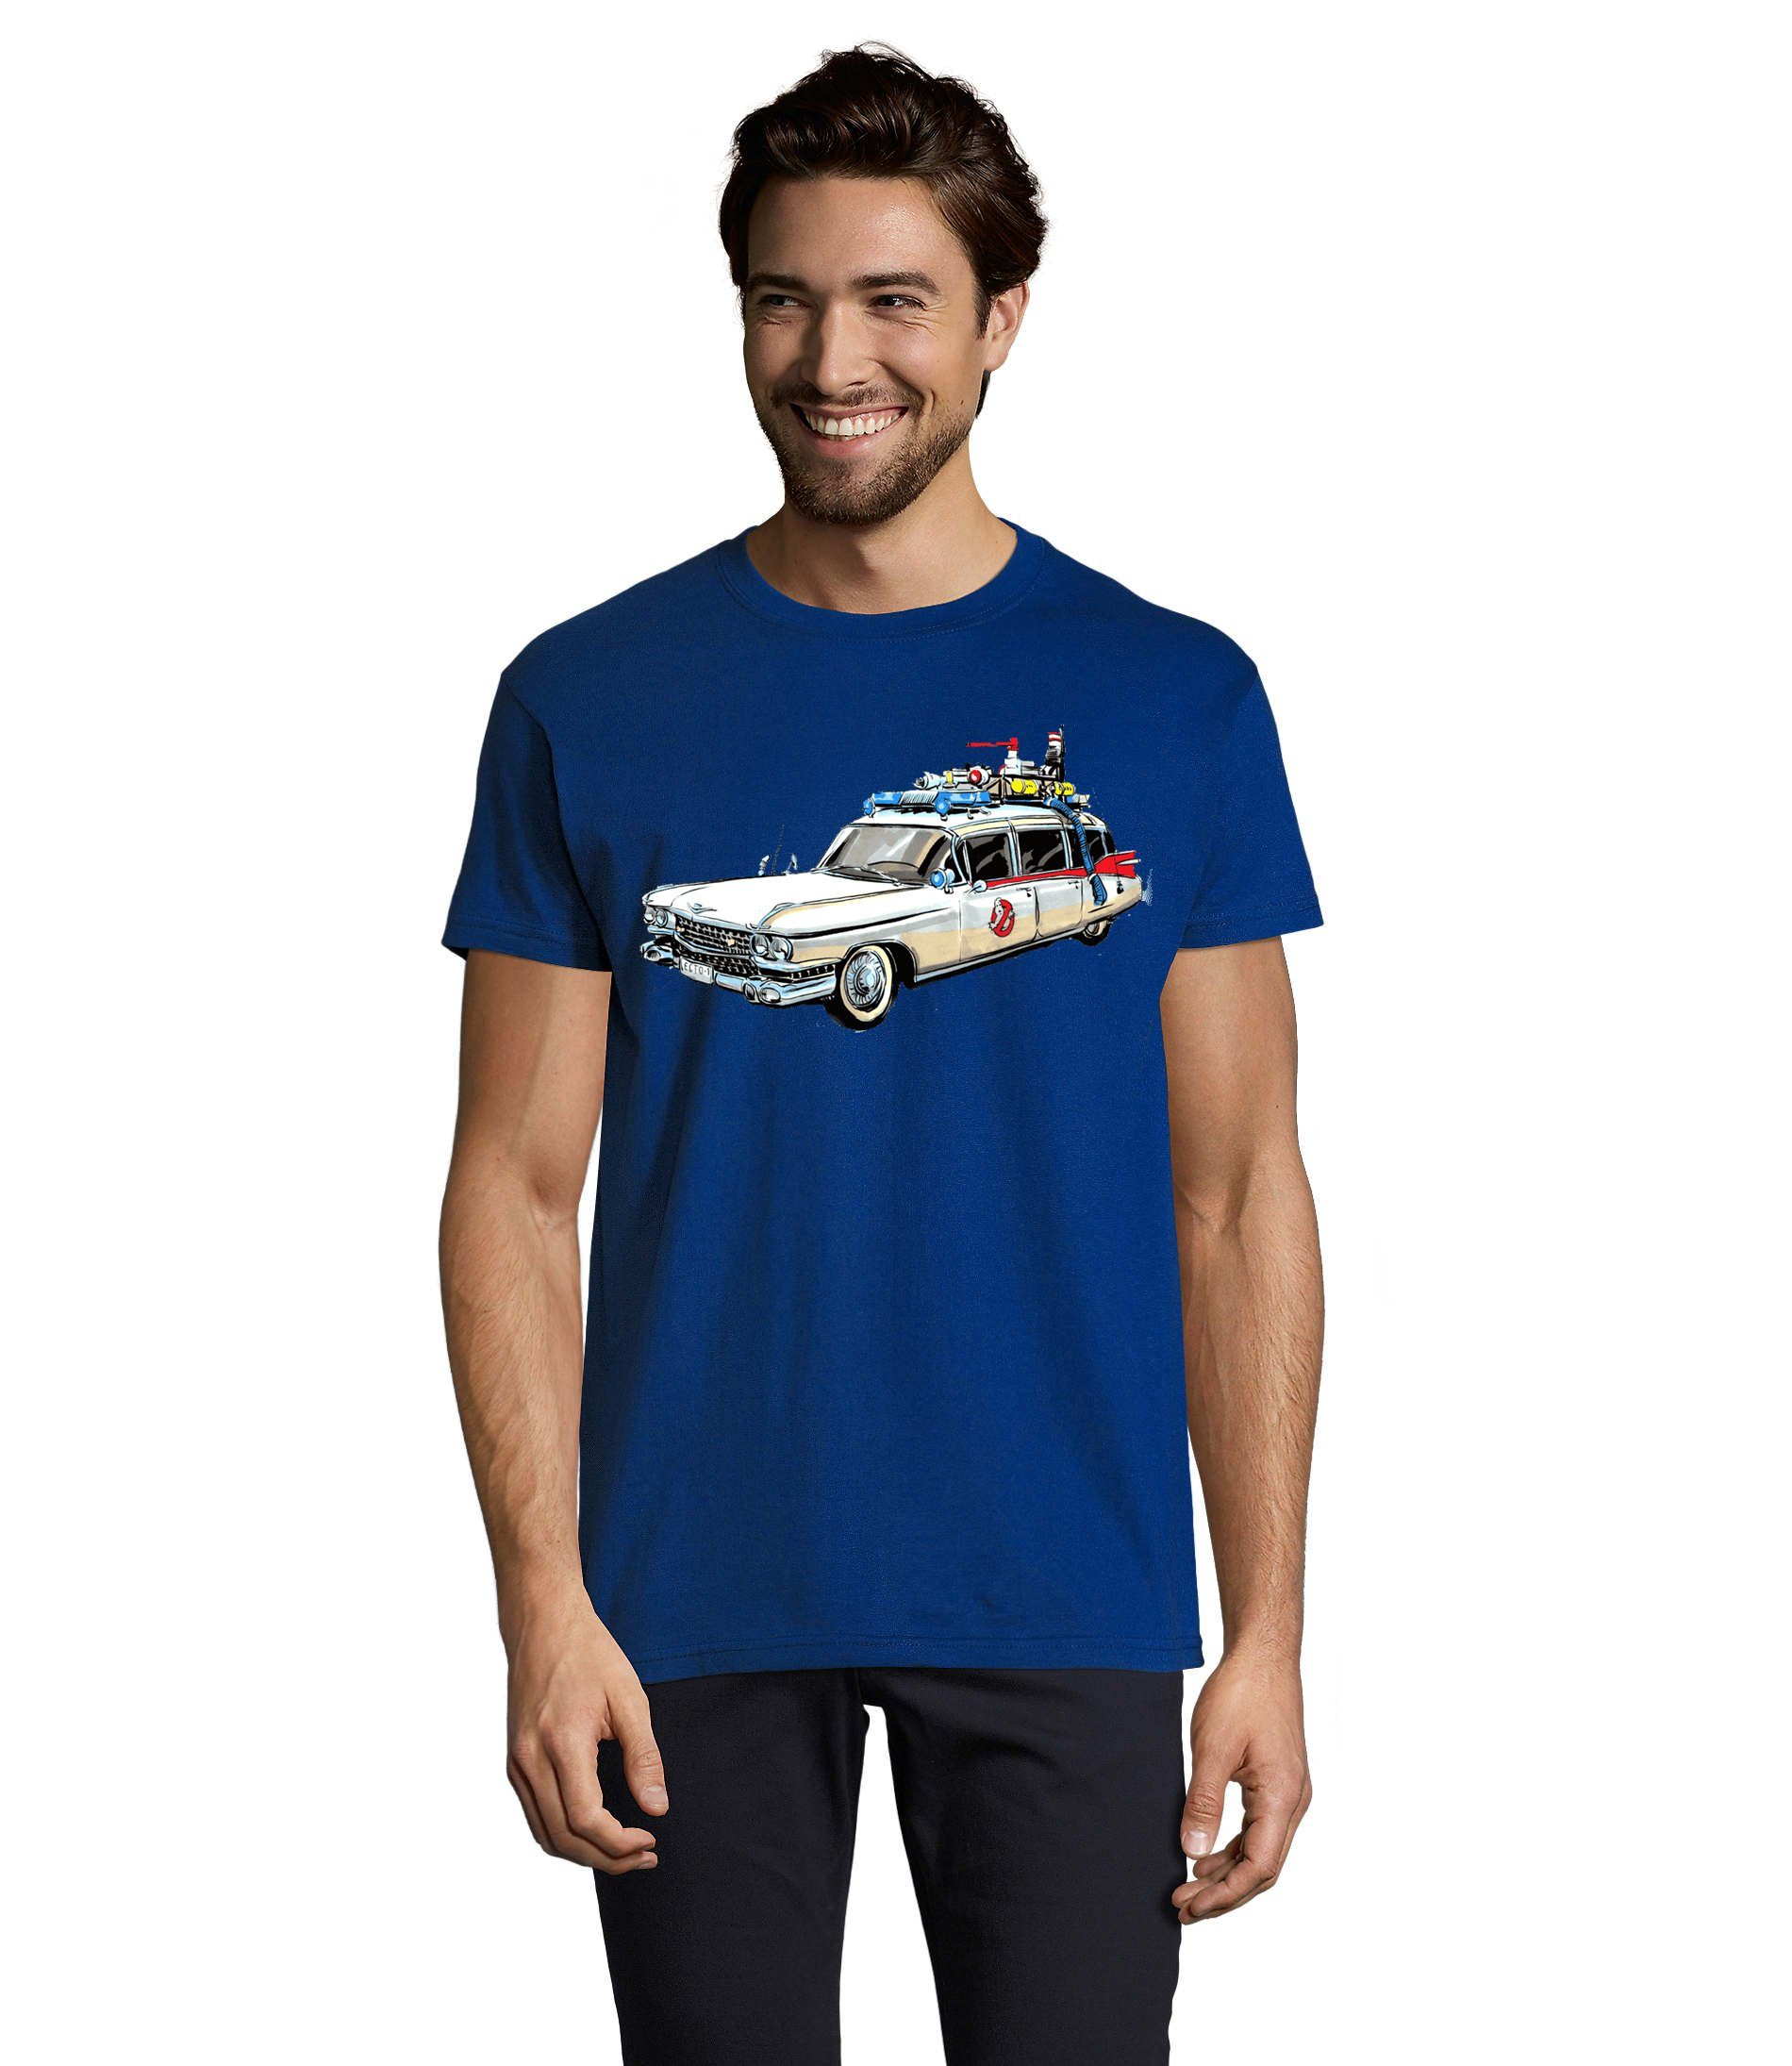 Händler Blondie & Brownie Ghostbusters Film T-Shirt Cars Geisterjäger Auto Blau Geister Ghost Herren